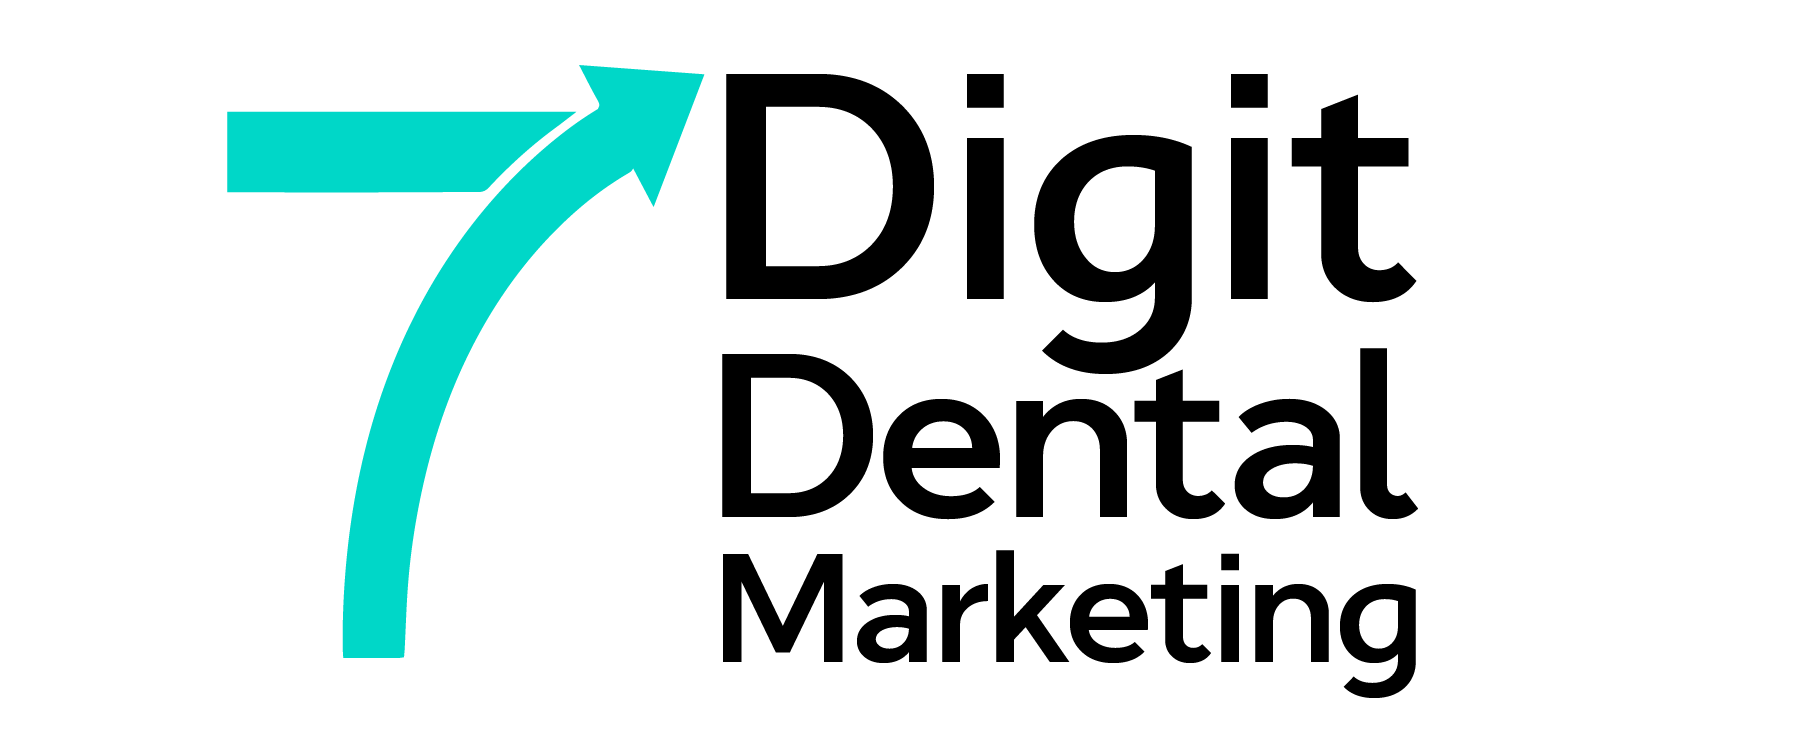 7 digit dental marketing logo